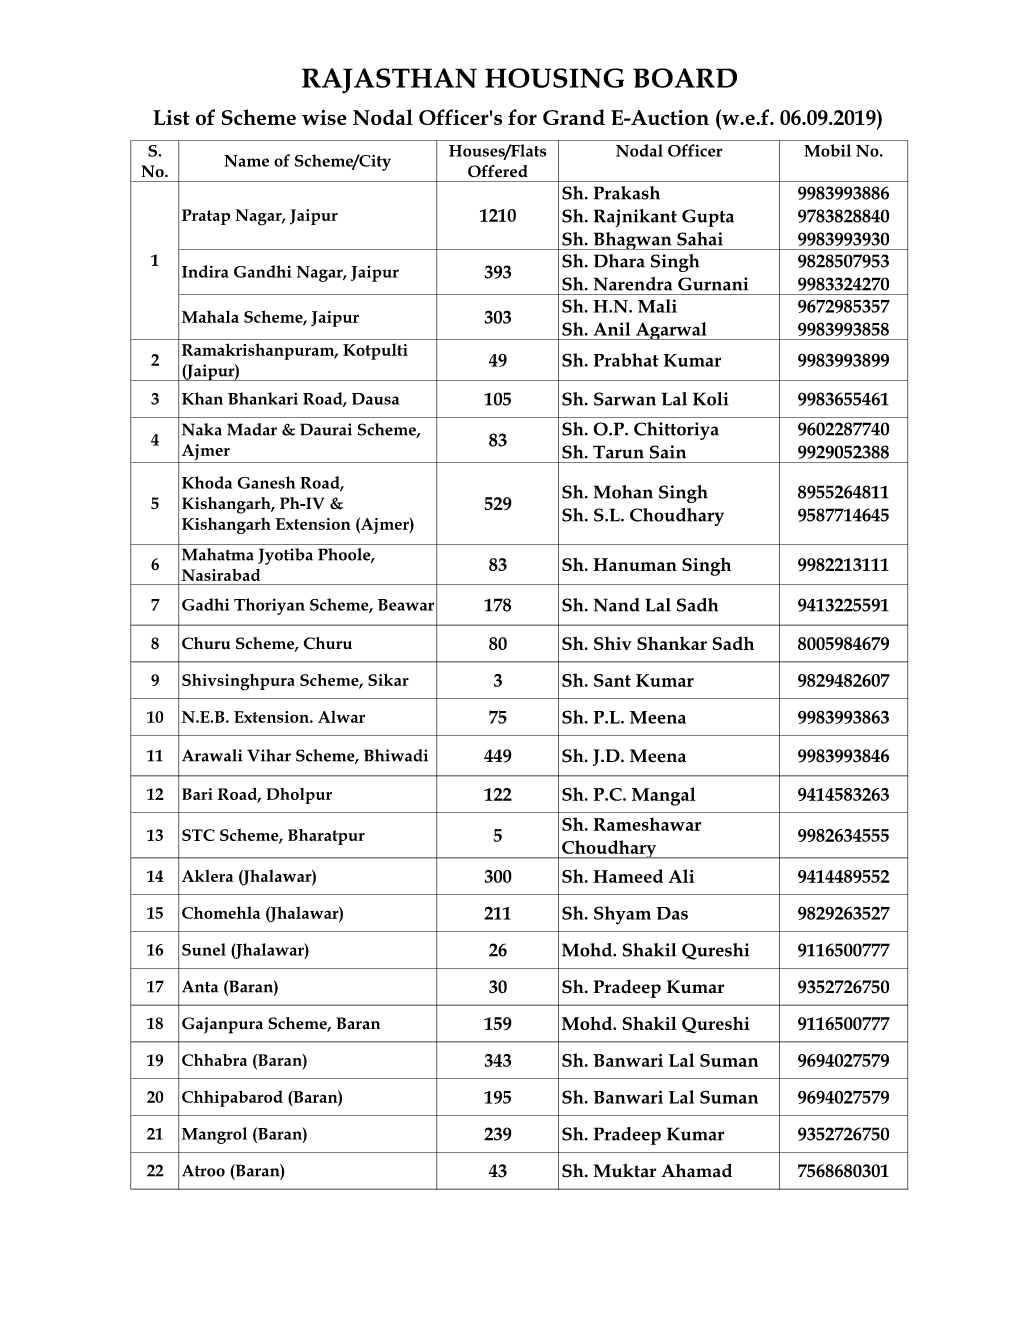 List of Scheme Wise Nodal Officer's for Grand E-Auction (W.E.F